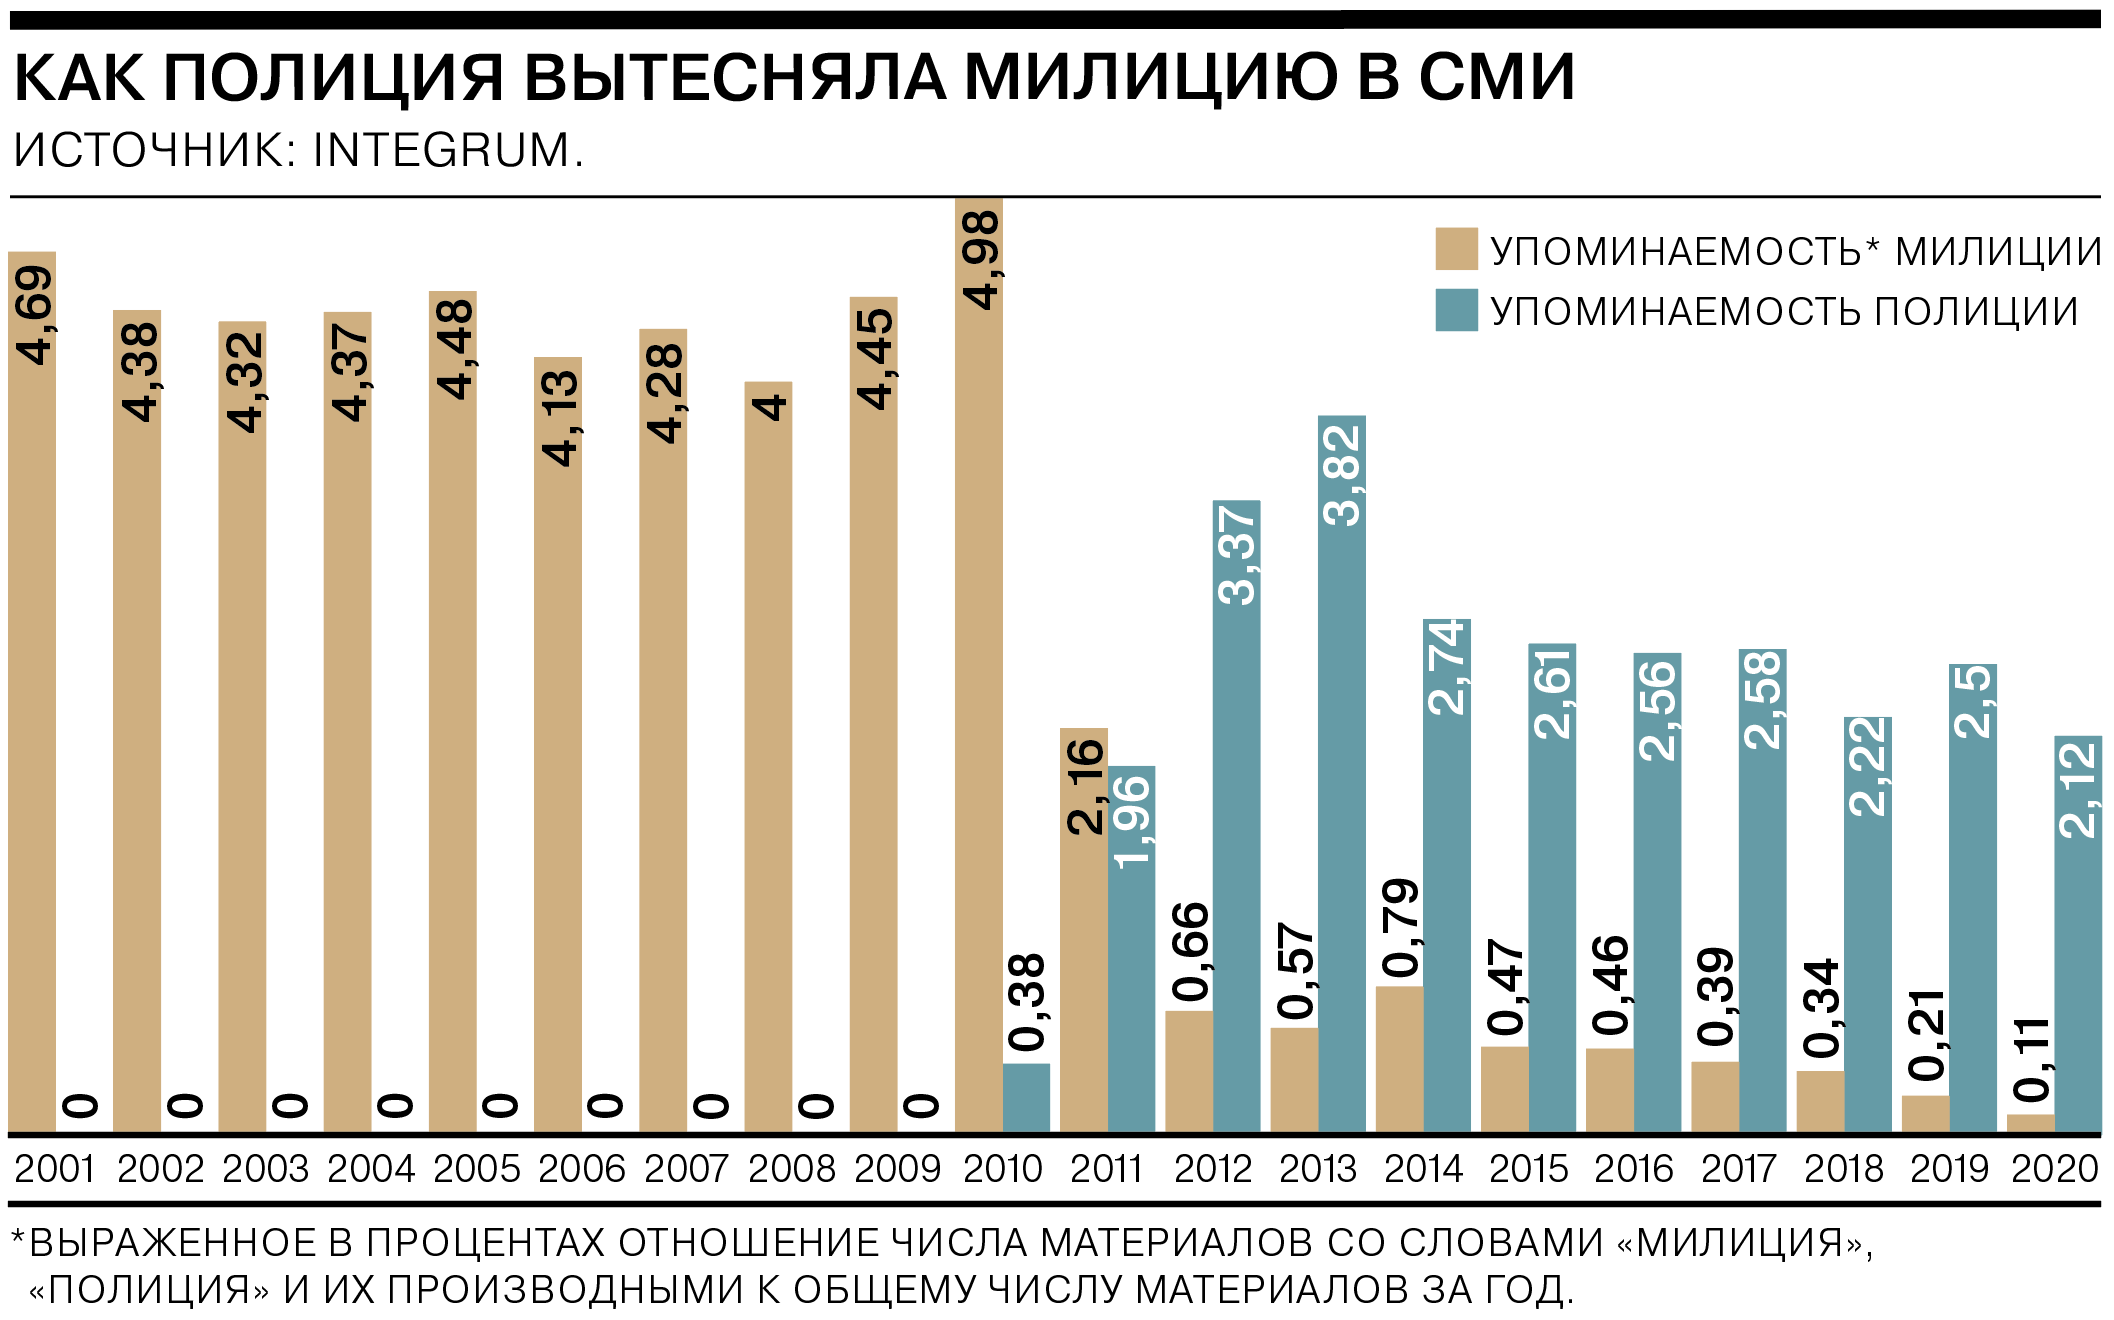 https://im.kommersant.ru/ISSUES.PHOTO/CORP/2021/02/05/5%D1%81%D0%BC%D0%B8.png